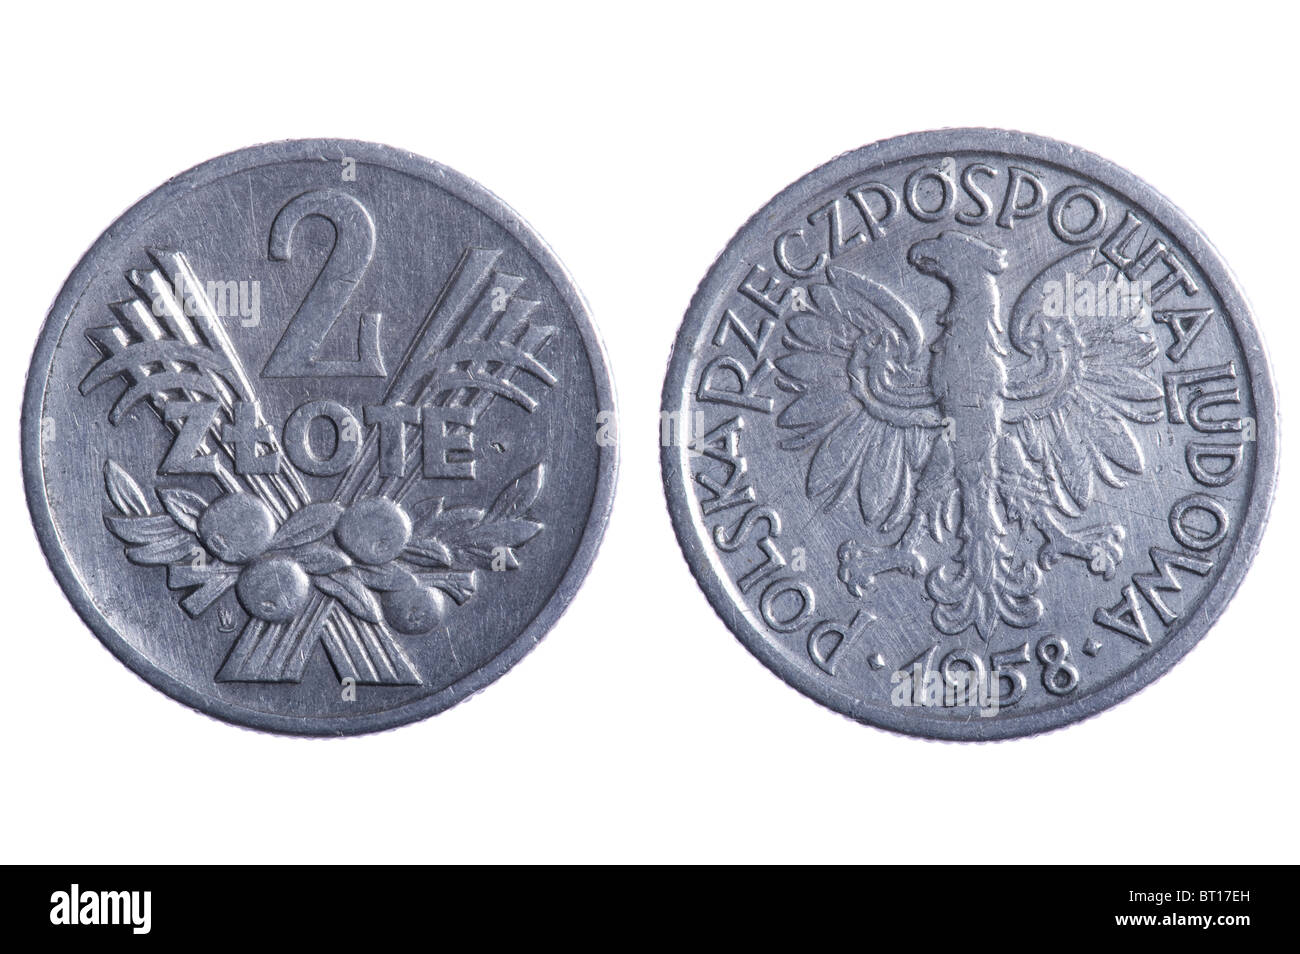 object on white - Polska coins close up Stock Photo